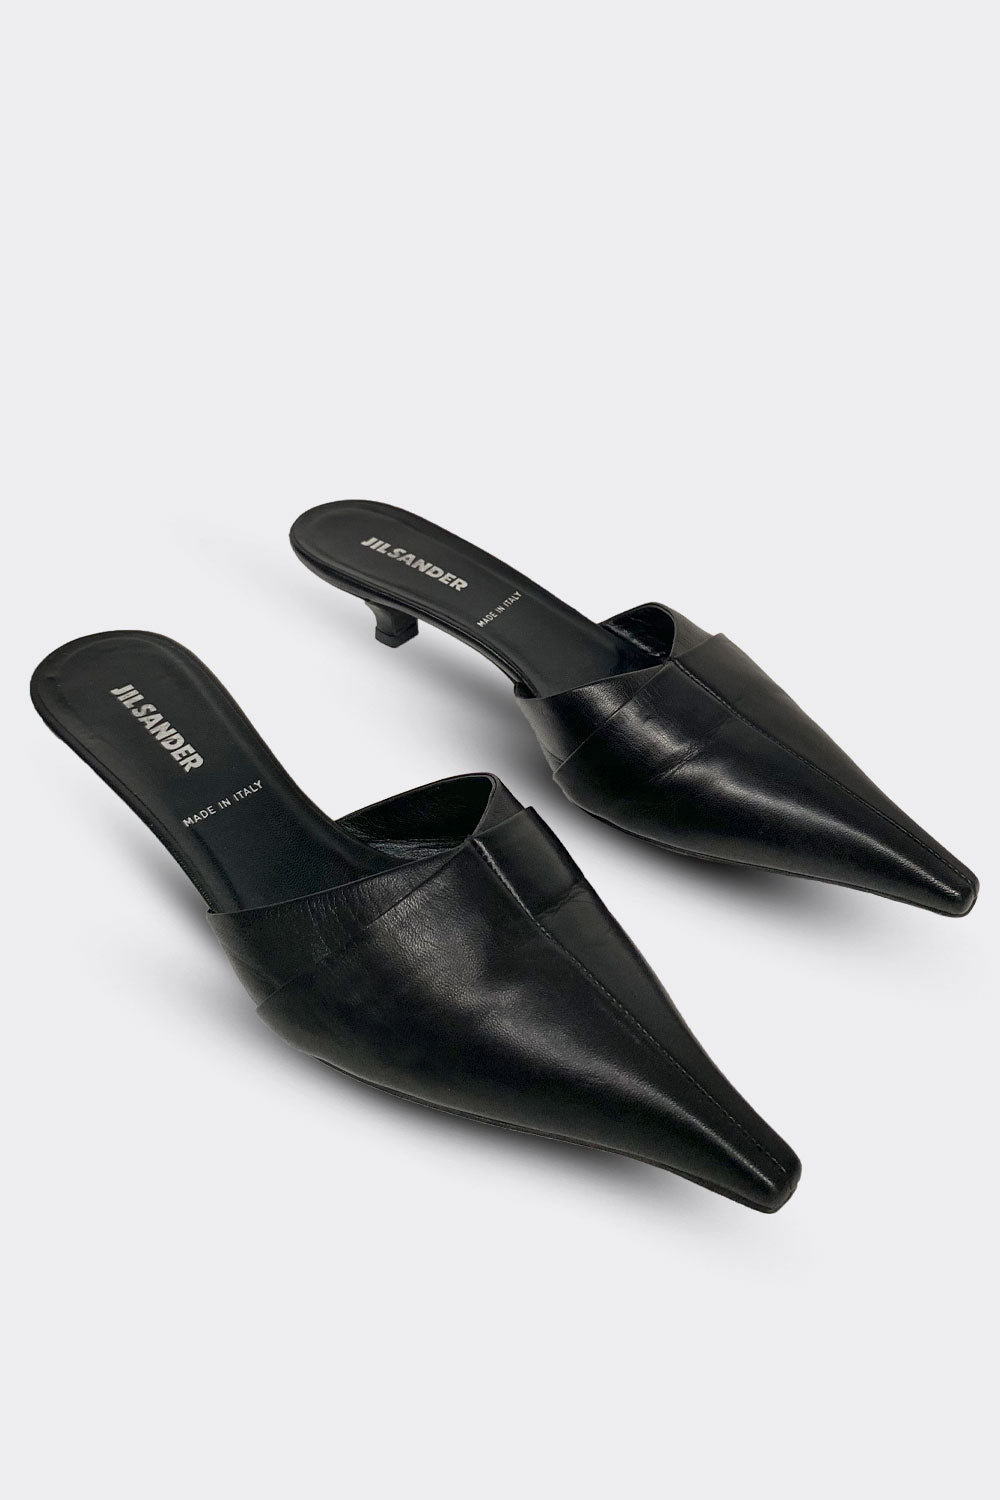 Jil Sander Leather Mules Size 37 (UK 4)